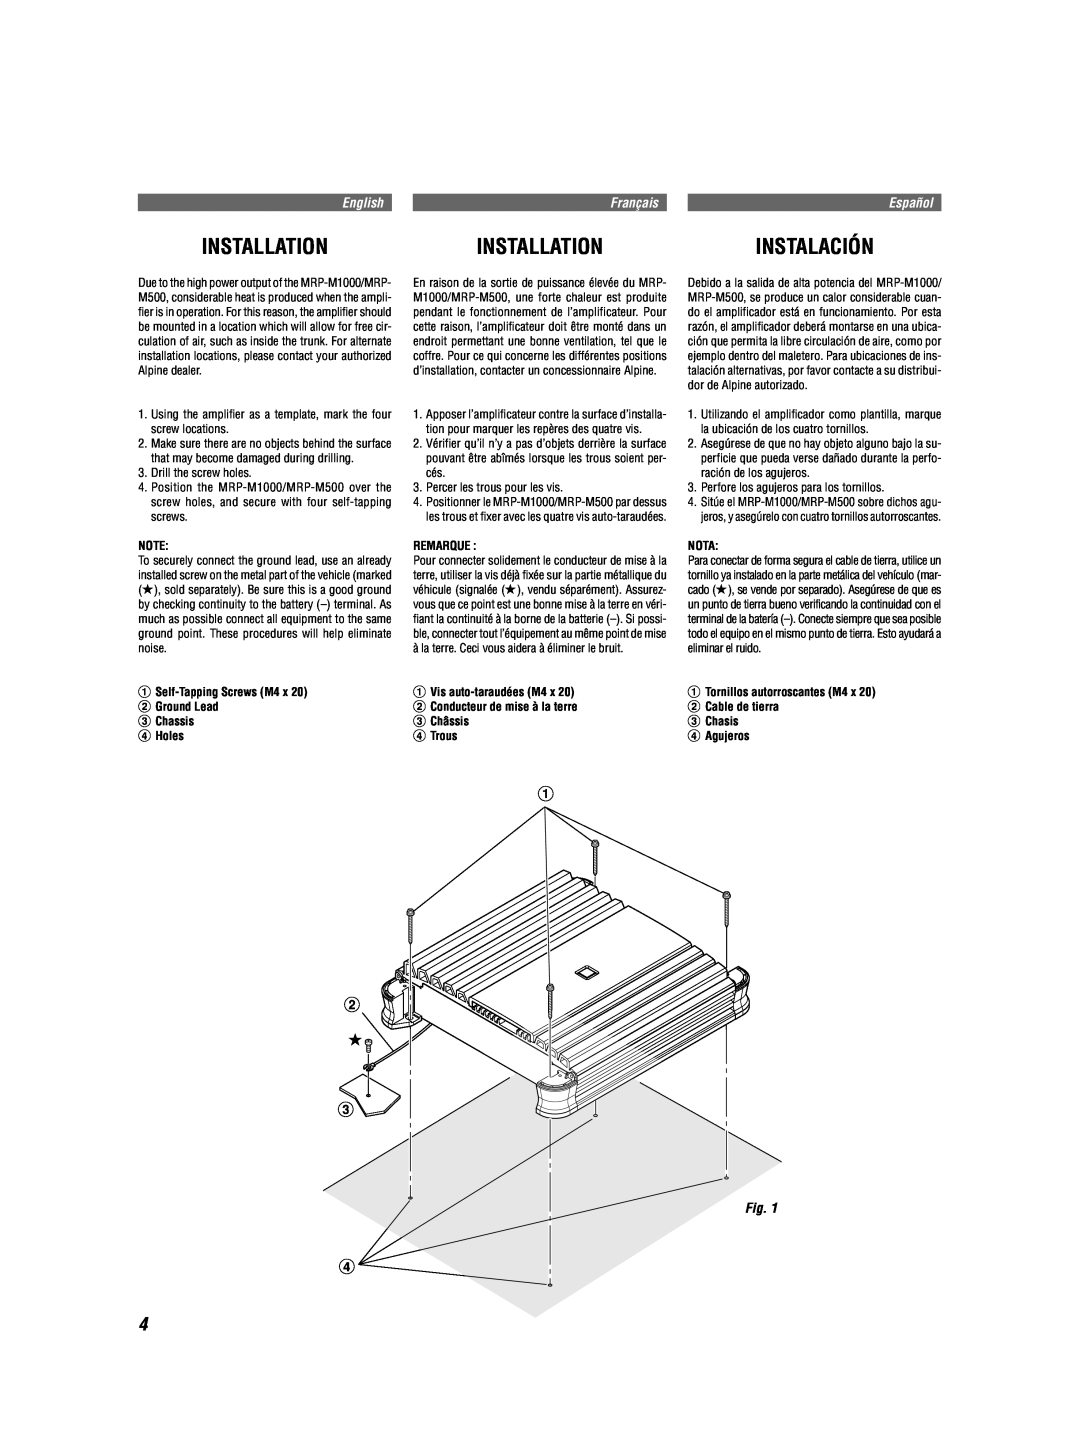 Alpine MRD-M500 owner manual Installation, Instalación, English, Français, Español 